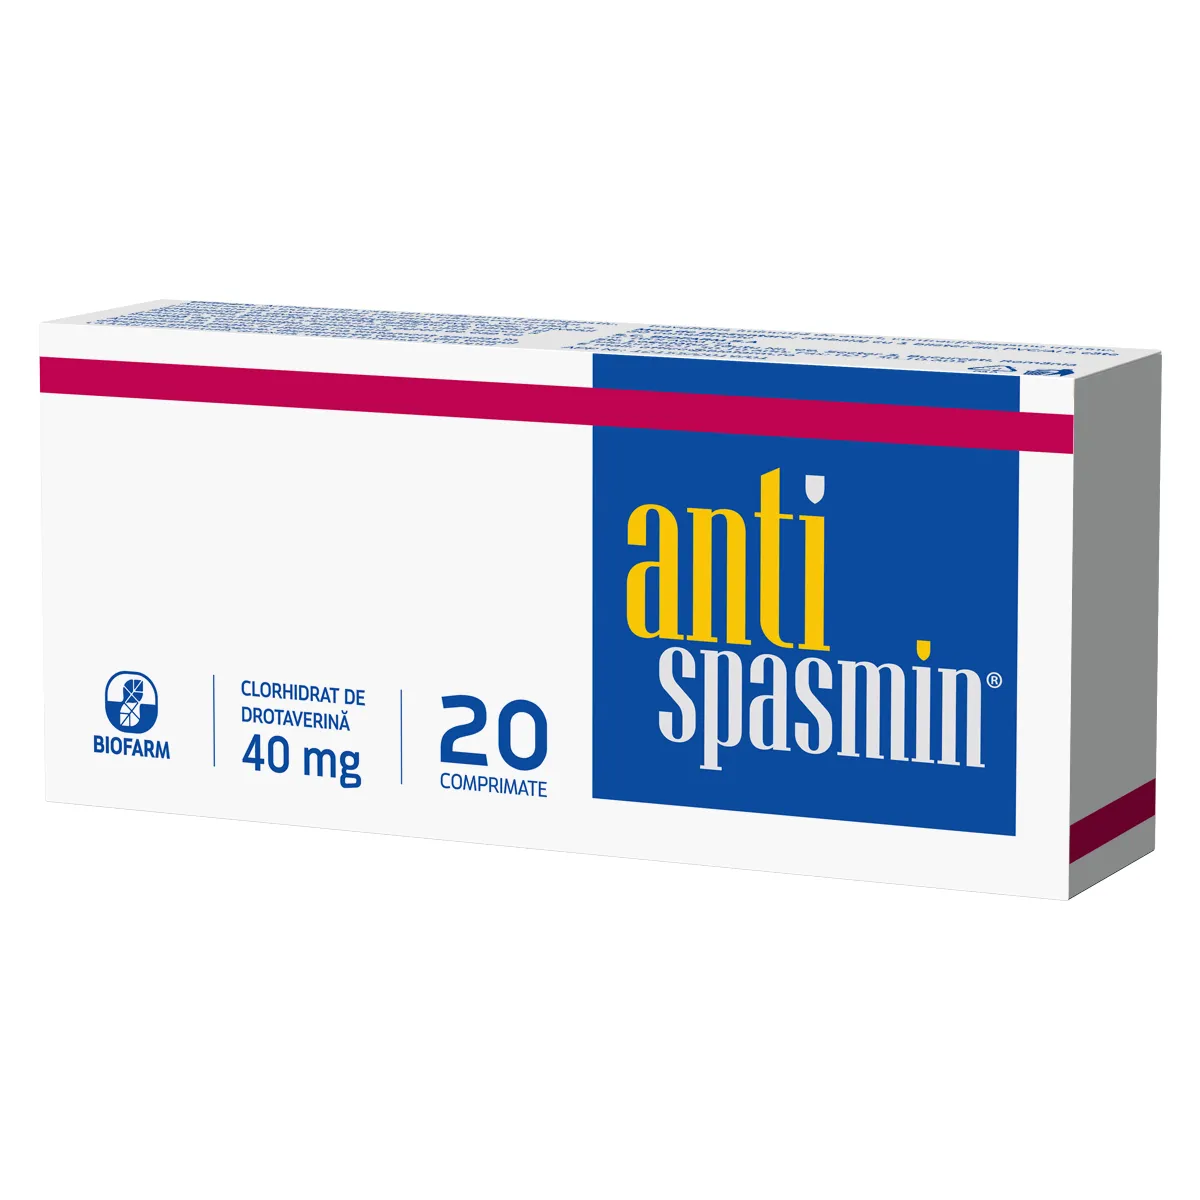 Antispasmin 40mg x 20 comprimate-Biofarm